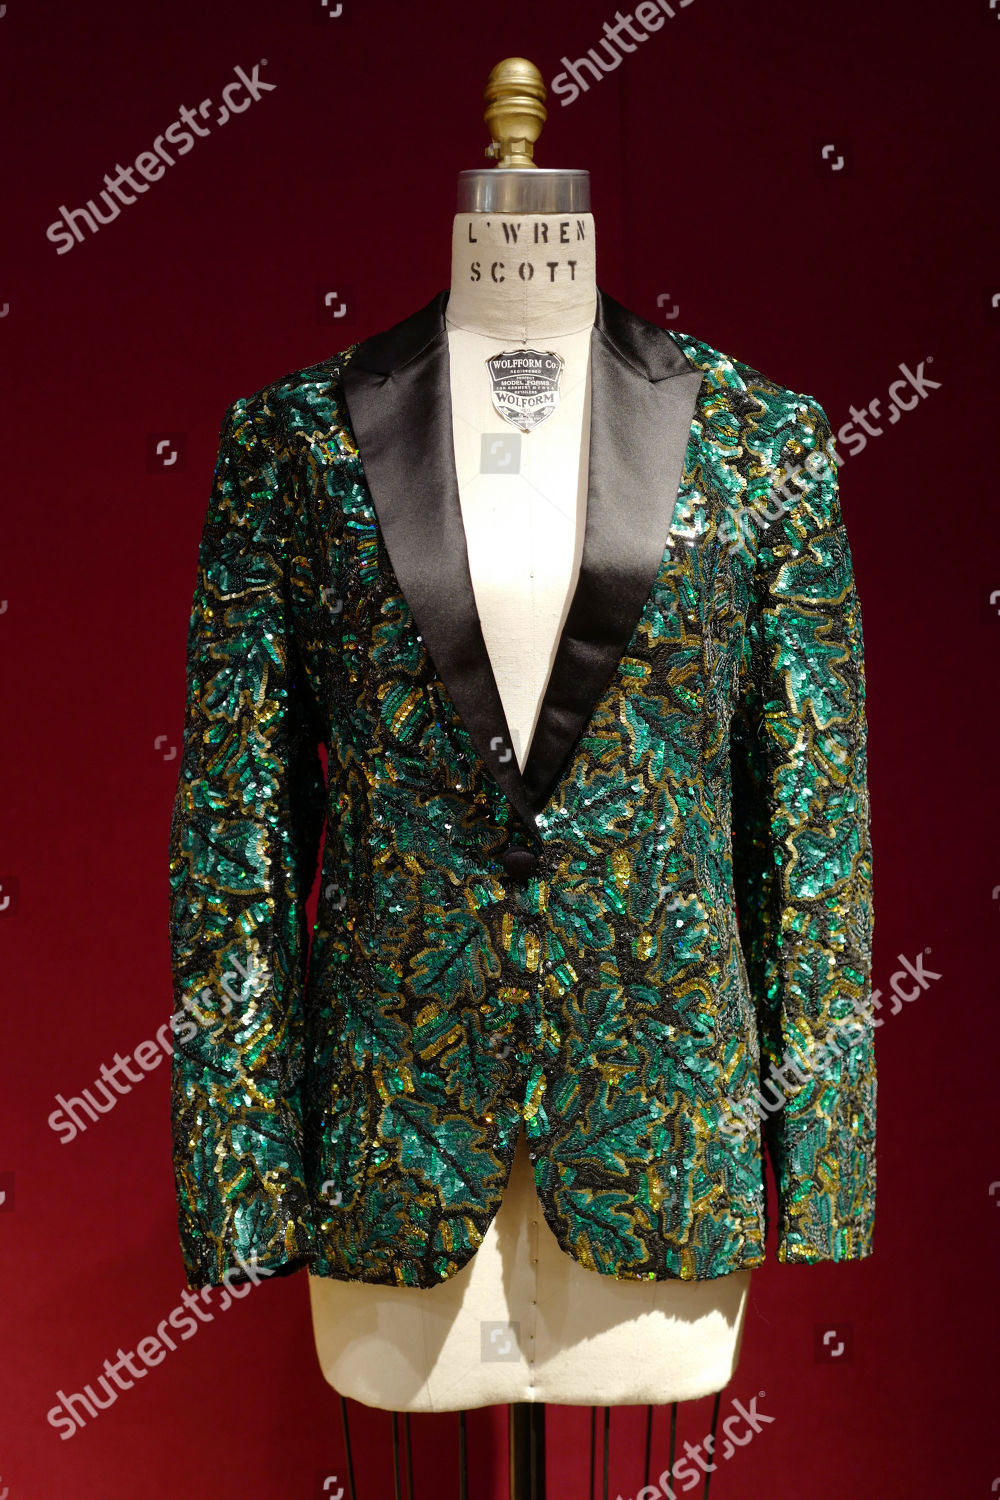 Mick Jagger jackets on sale in L'Wren Scott designs auction